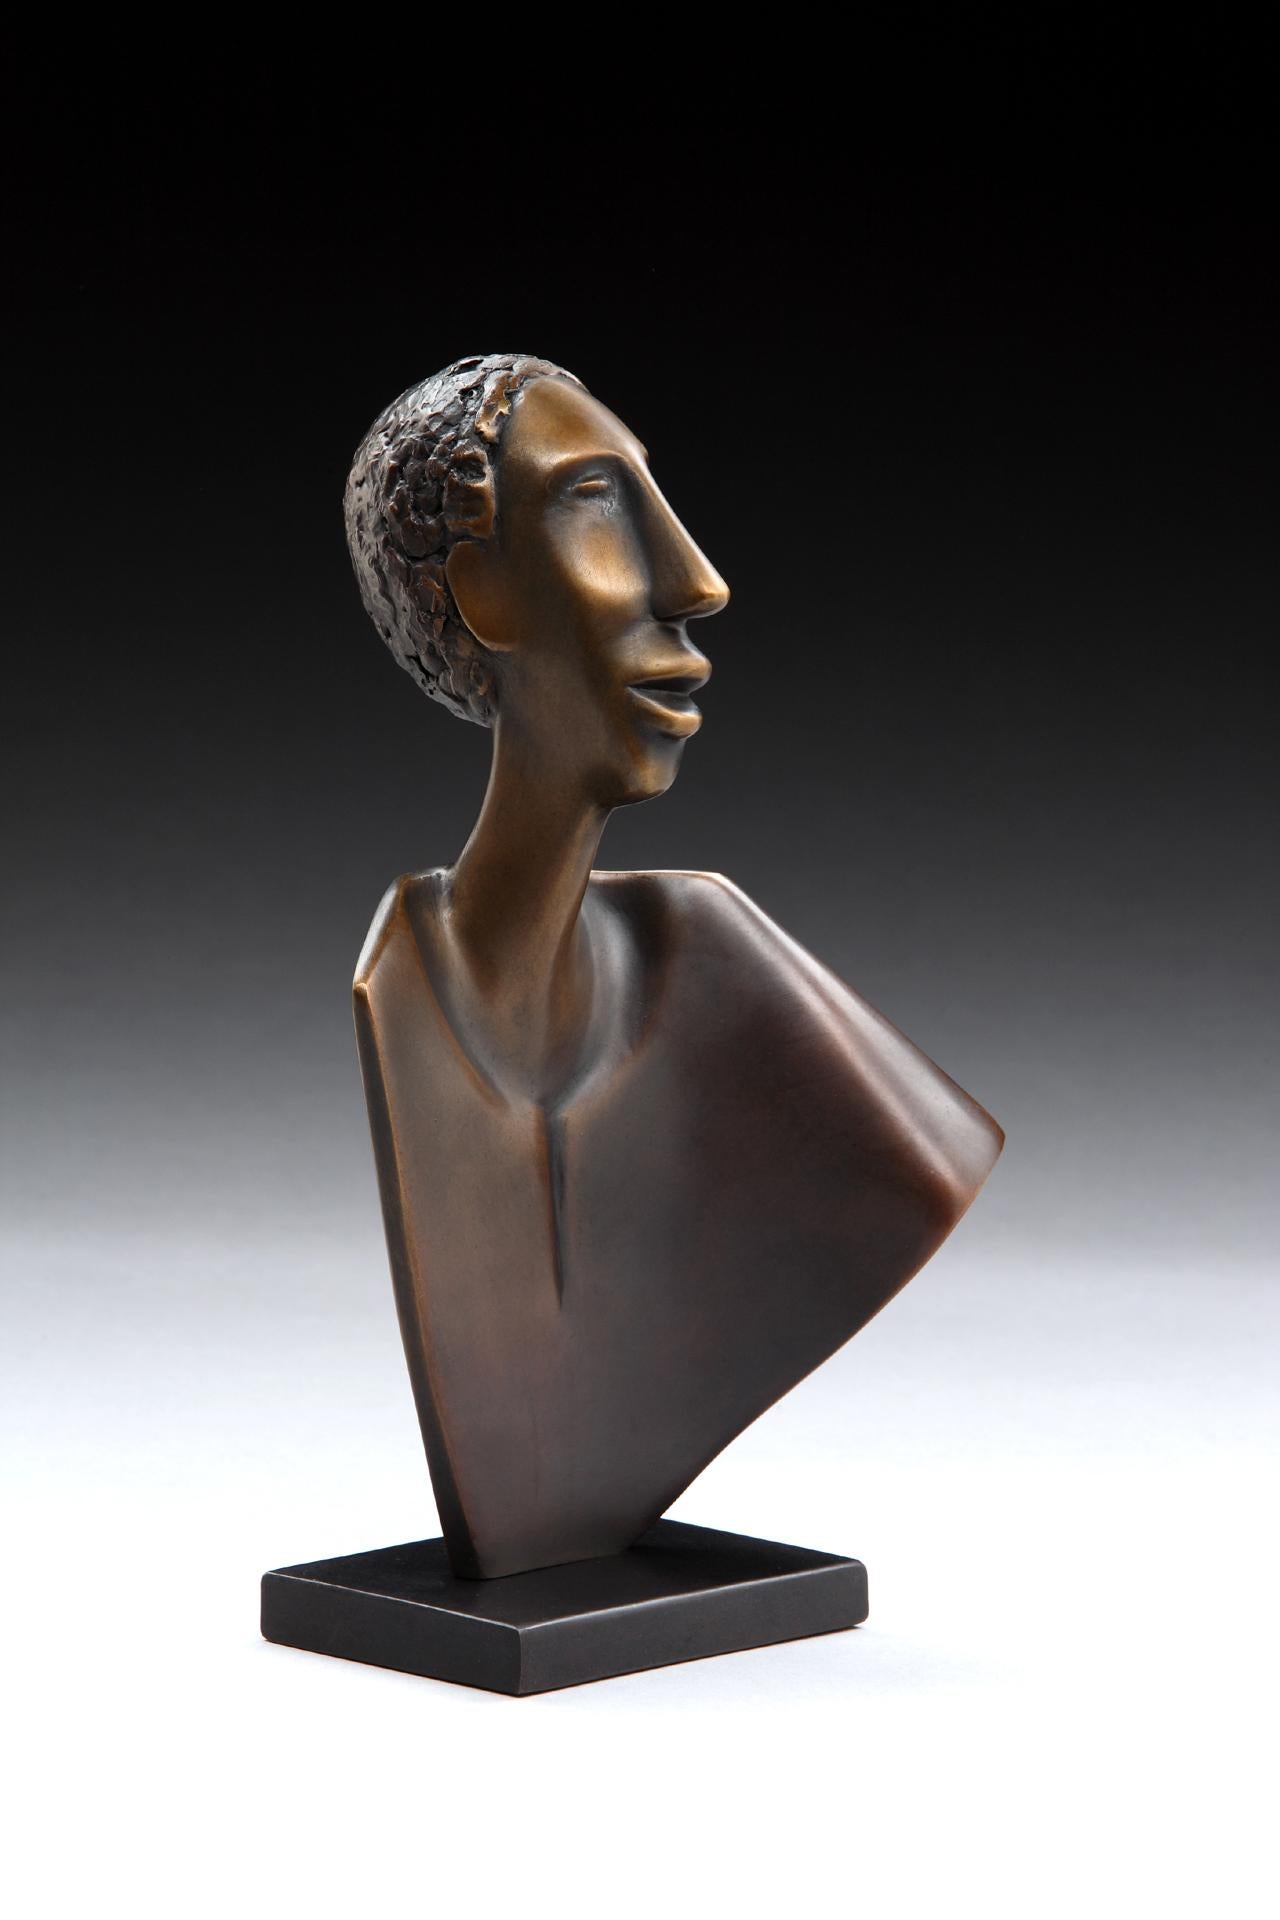 Singing - Sculpture by Carol Gold